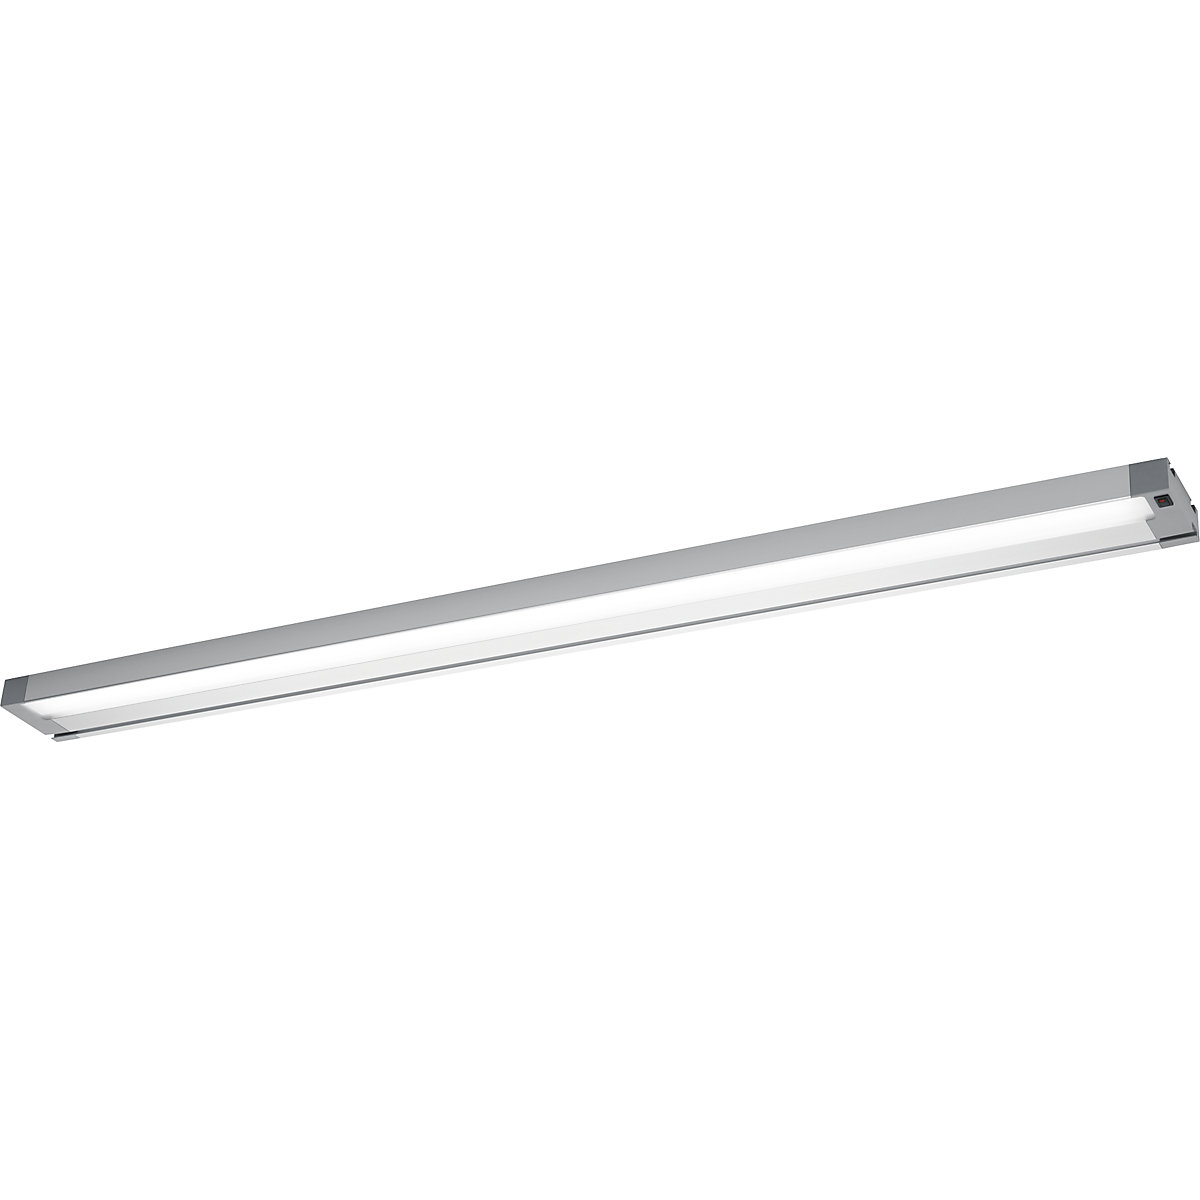 LED system light – Waldmann, aluminium, length 1499 mm, 63 W-4